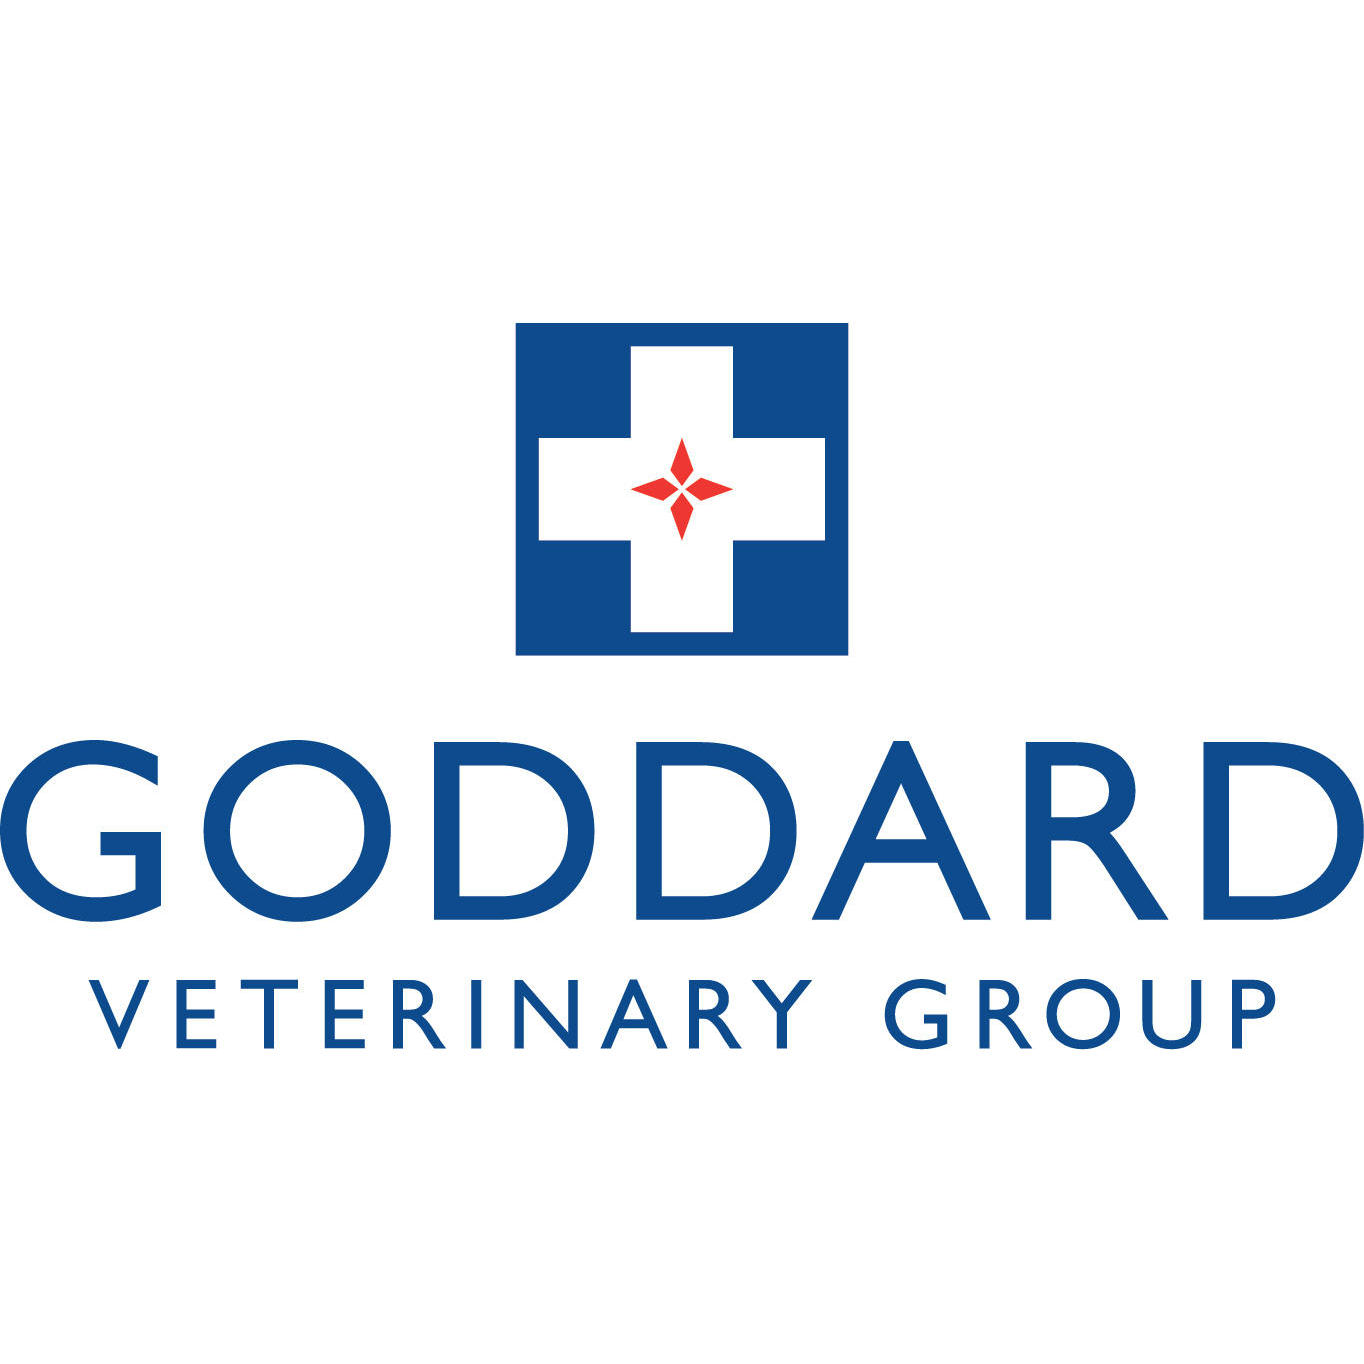 Goddard Veterinary Group, Stockwell - London, London SW8 1UQ - 020 7498 6363 | ShowMeLocal.com